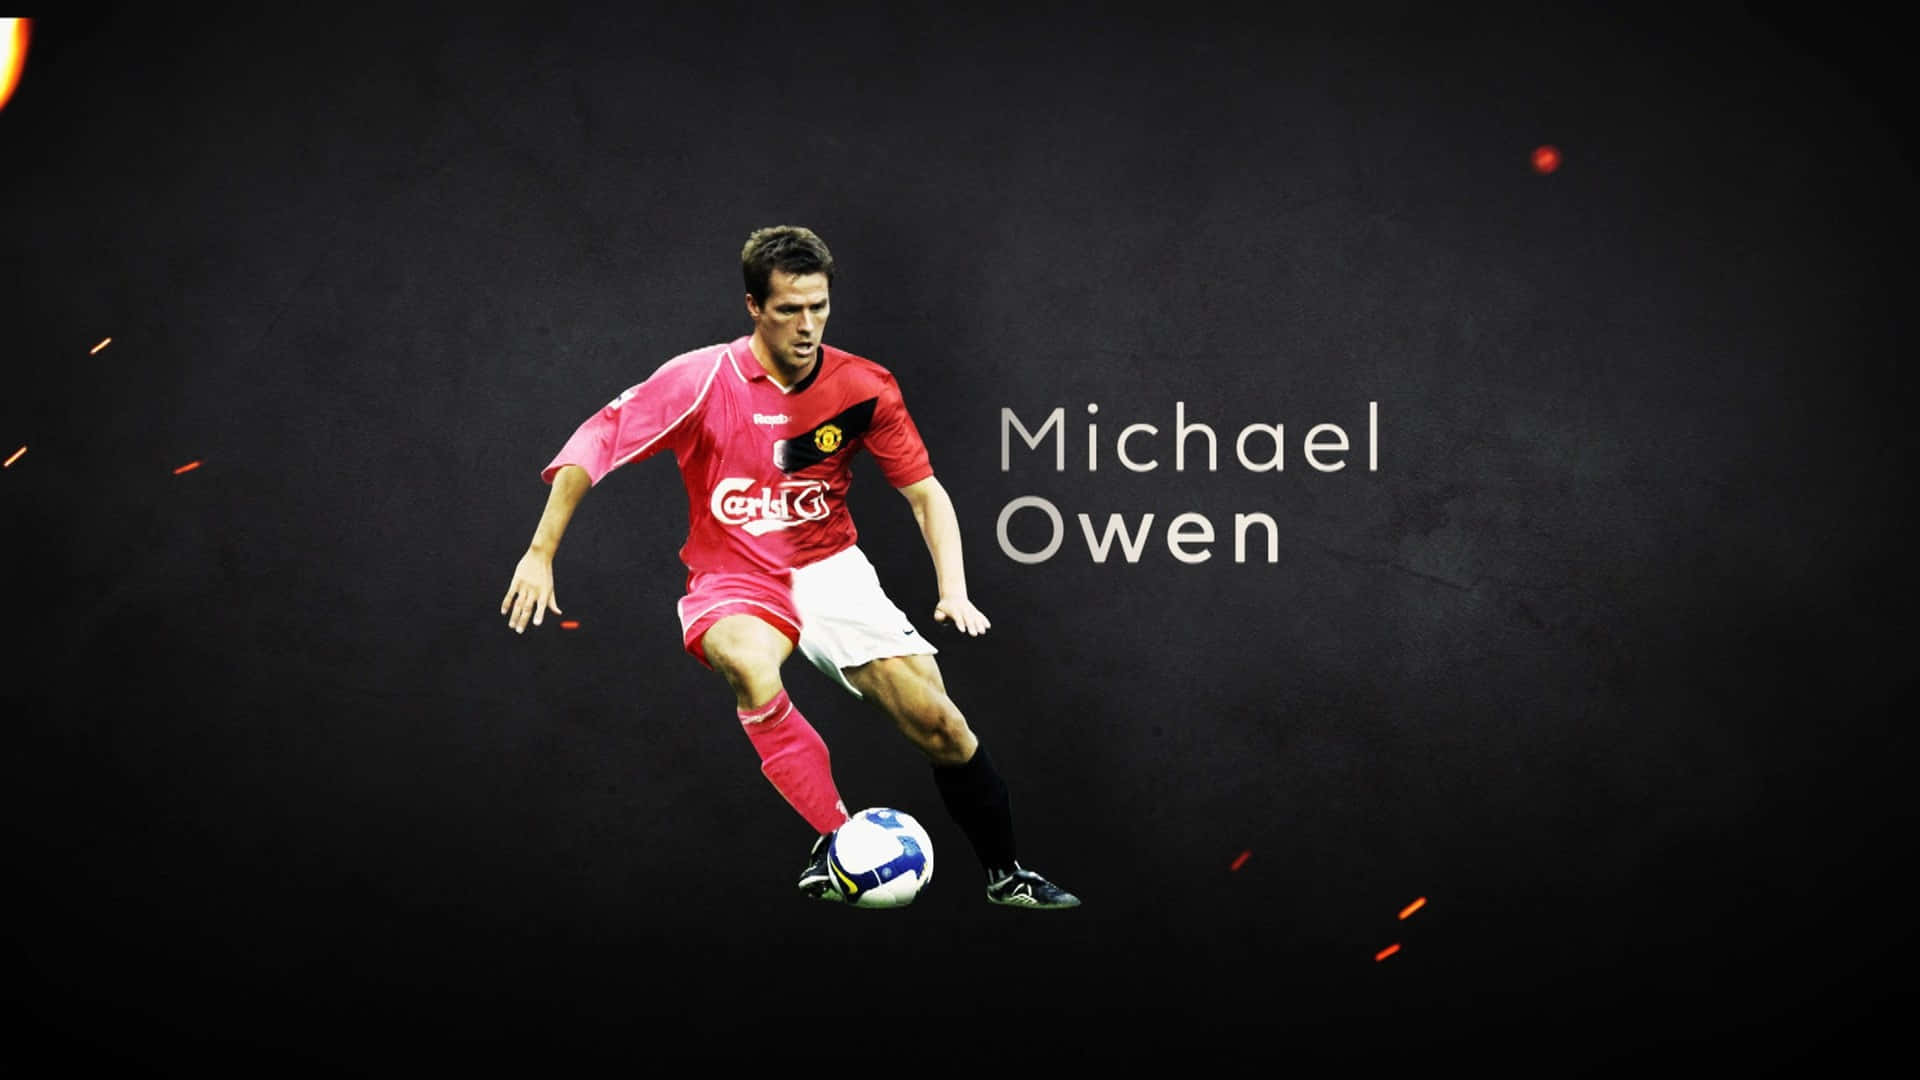 English Football Player Michael Owen Poster Wallpaper